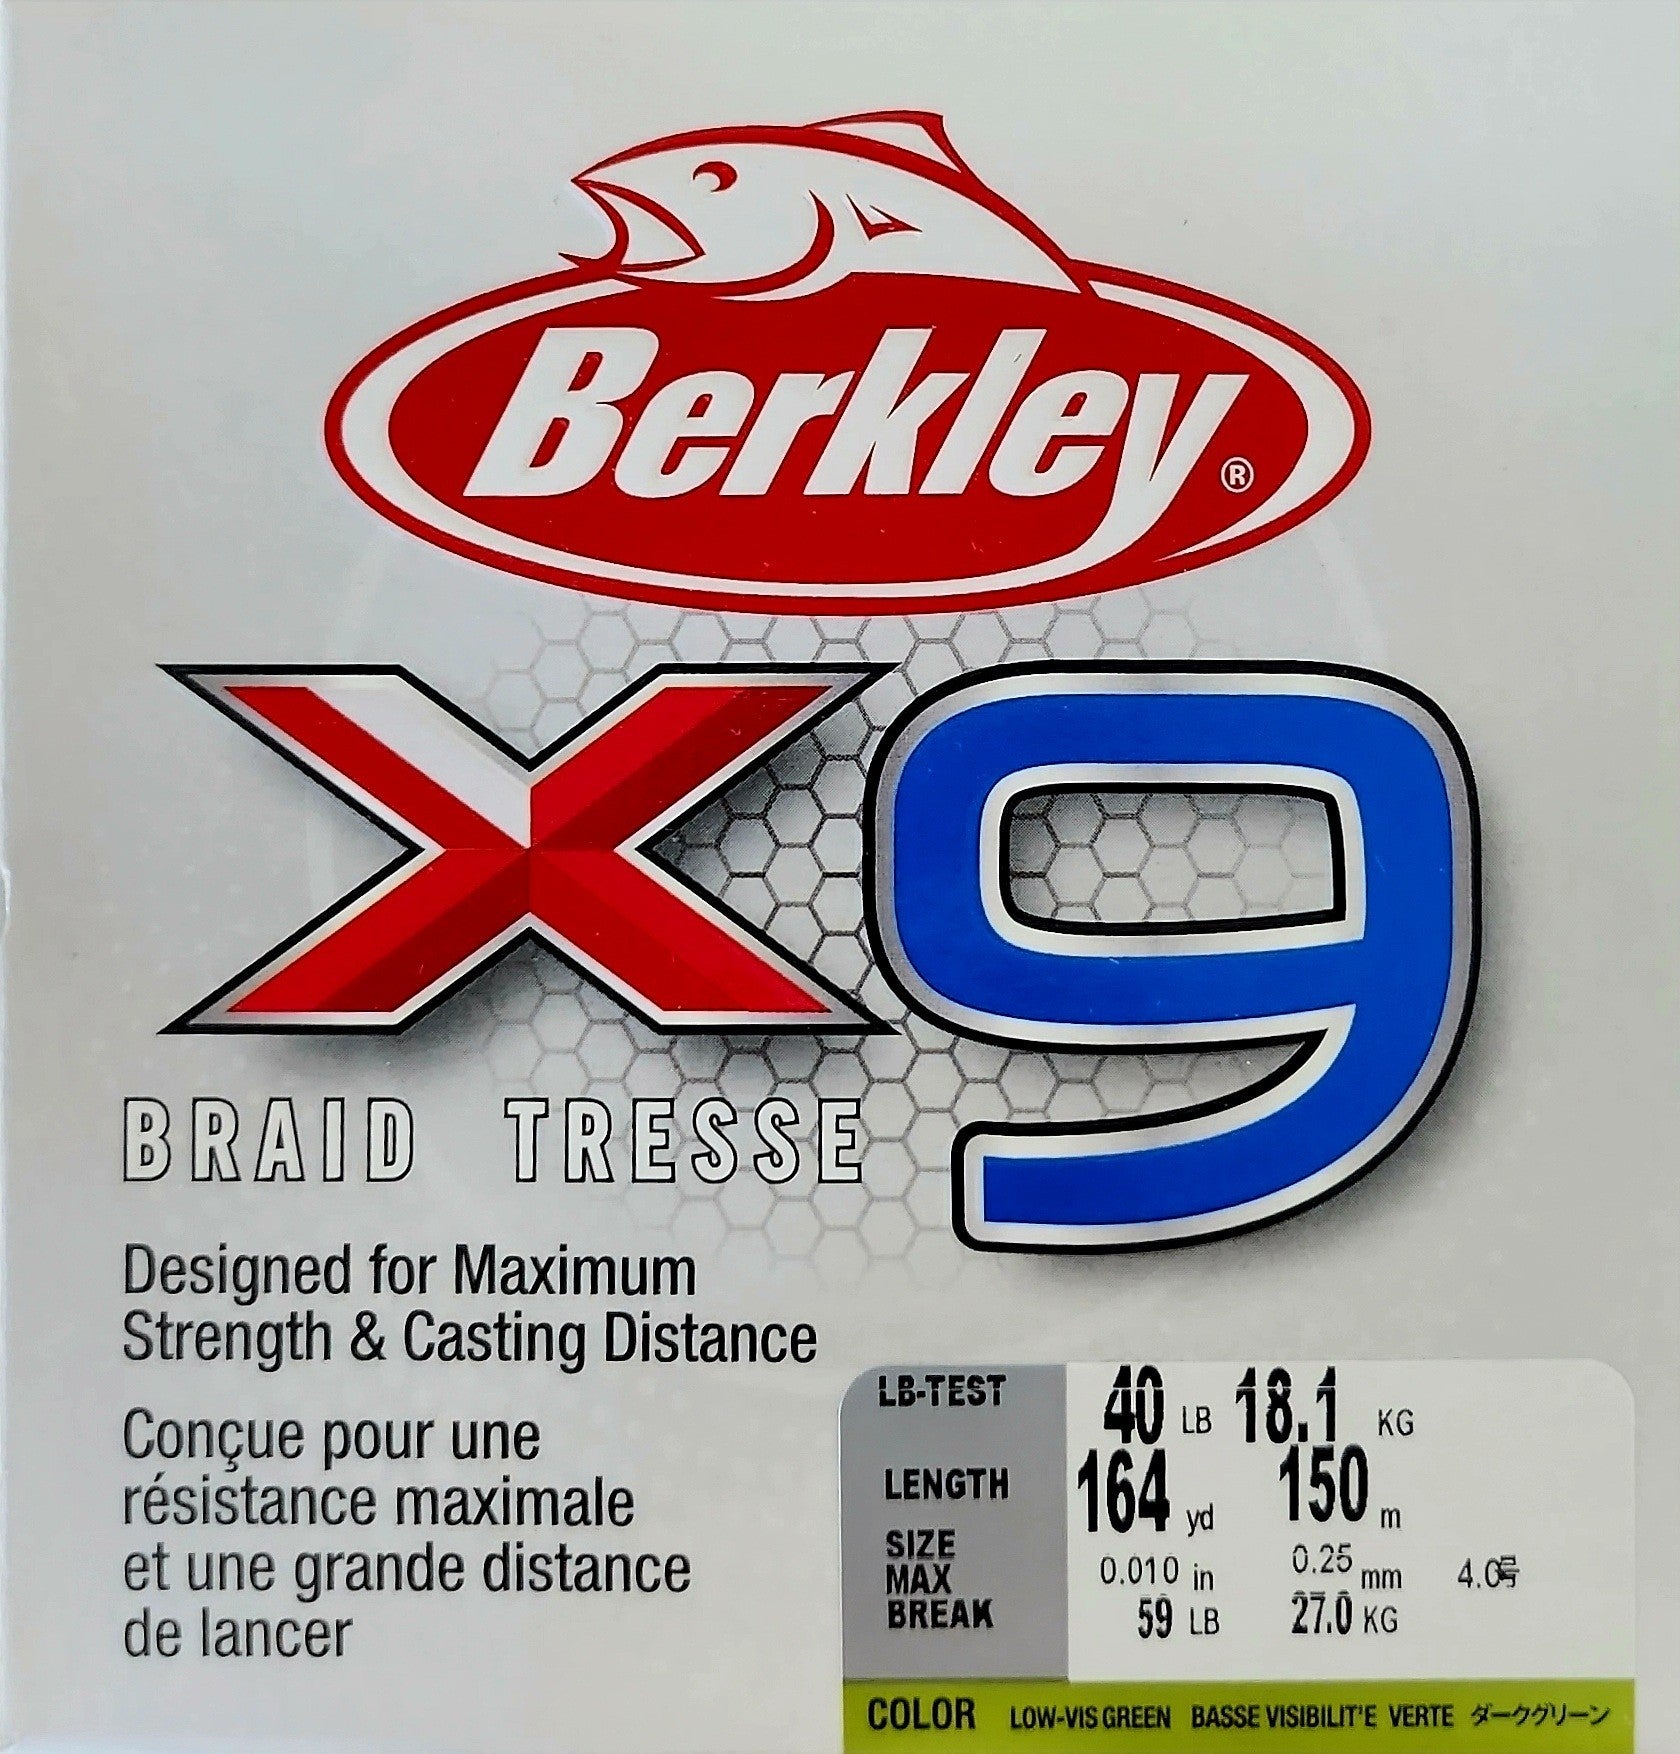 x5 Braid - Berkley® Fishing US